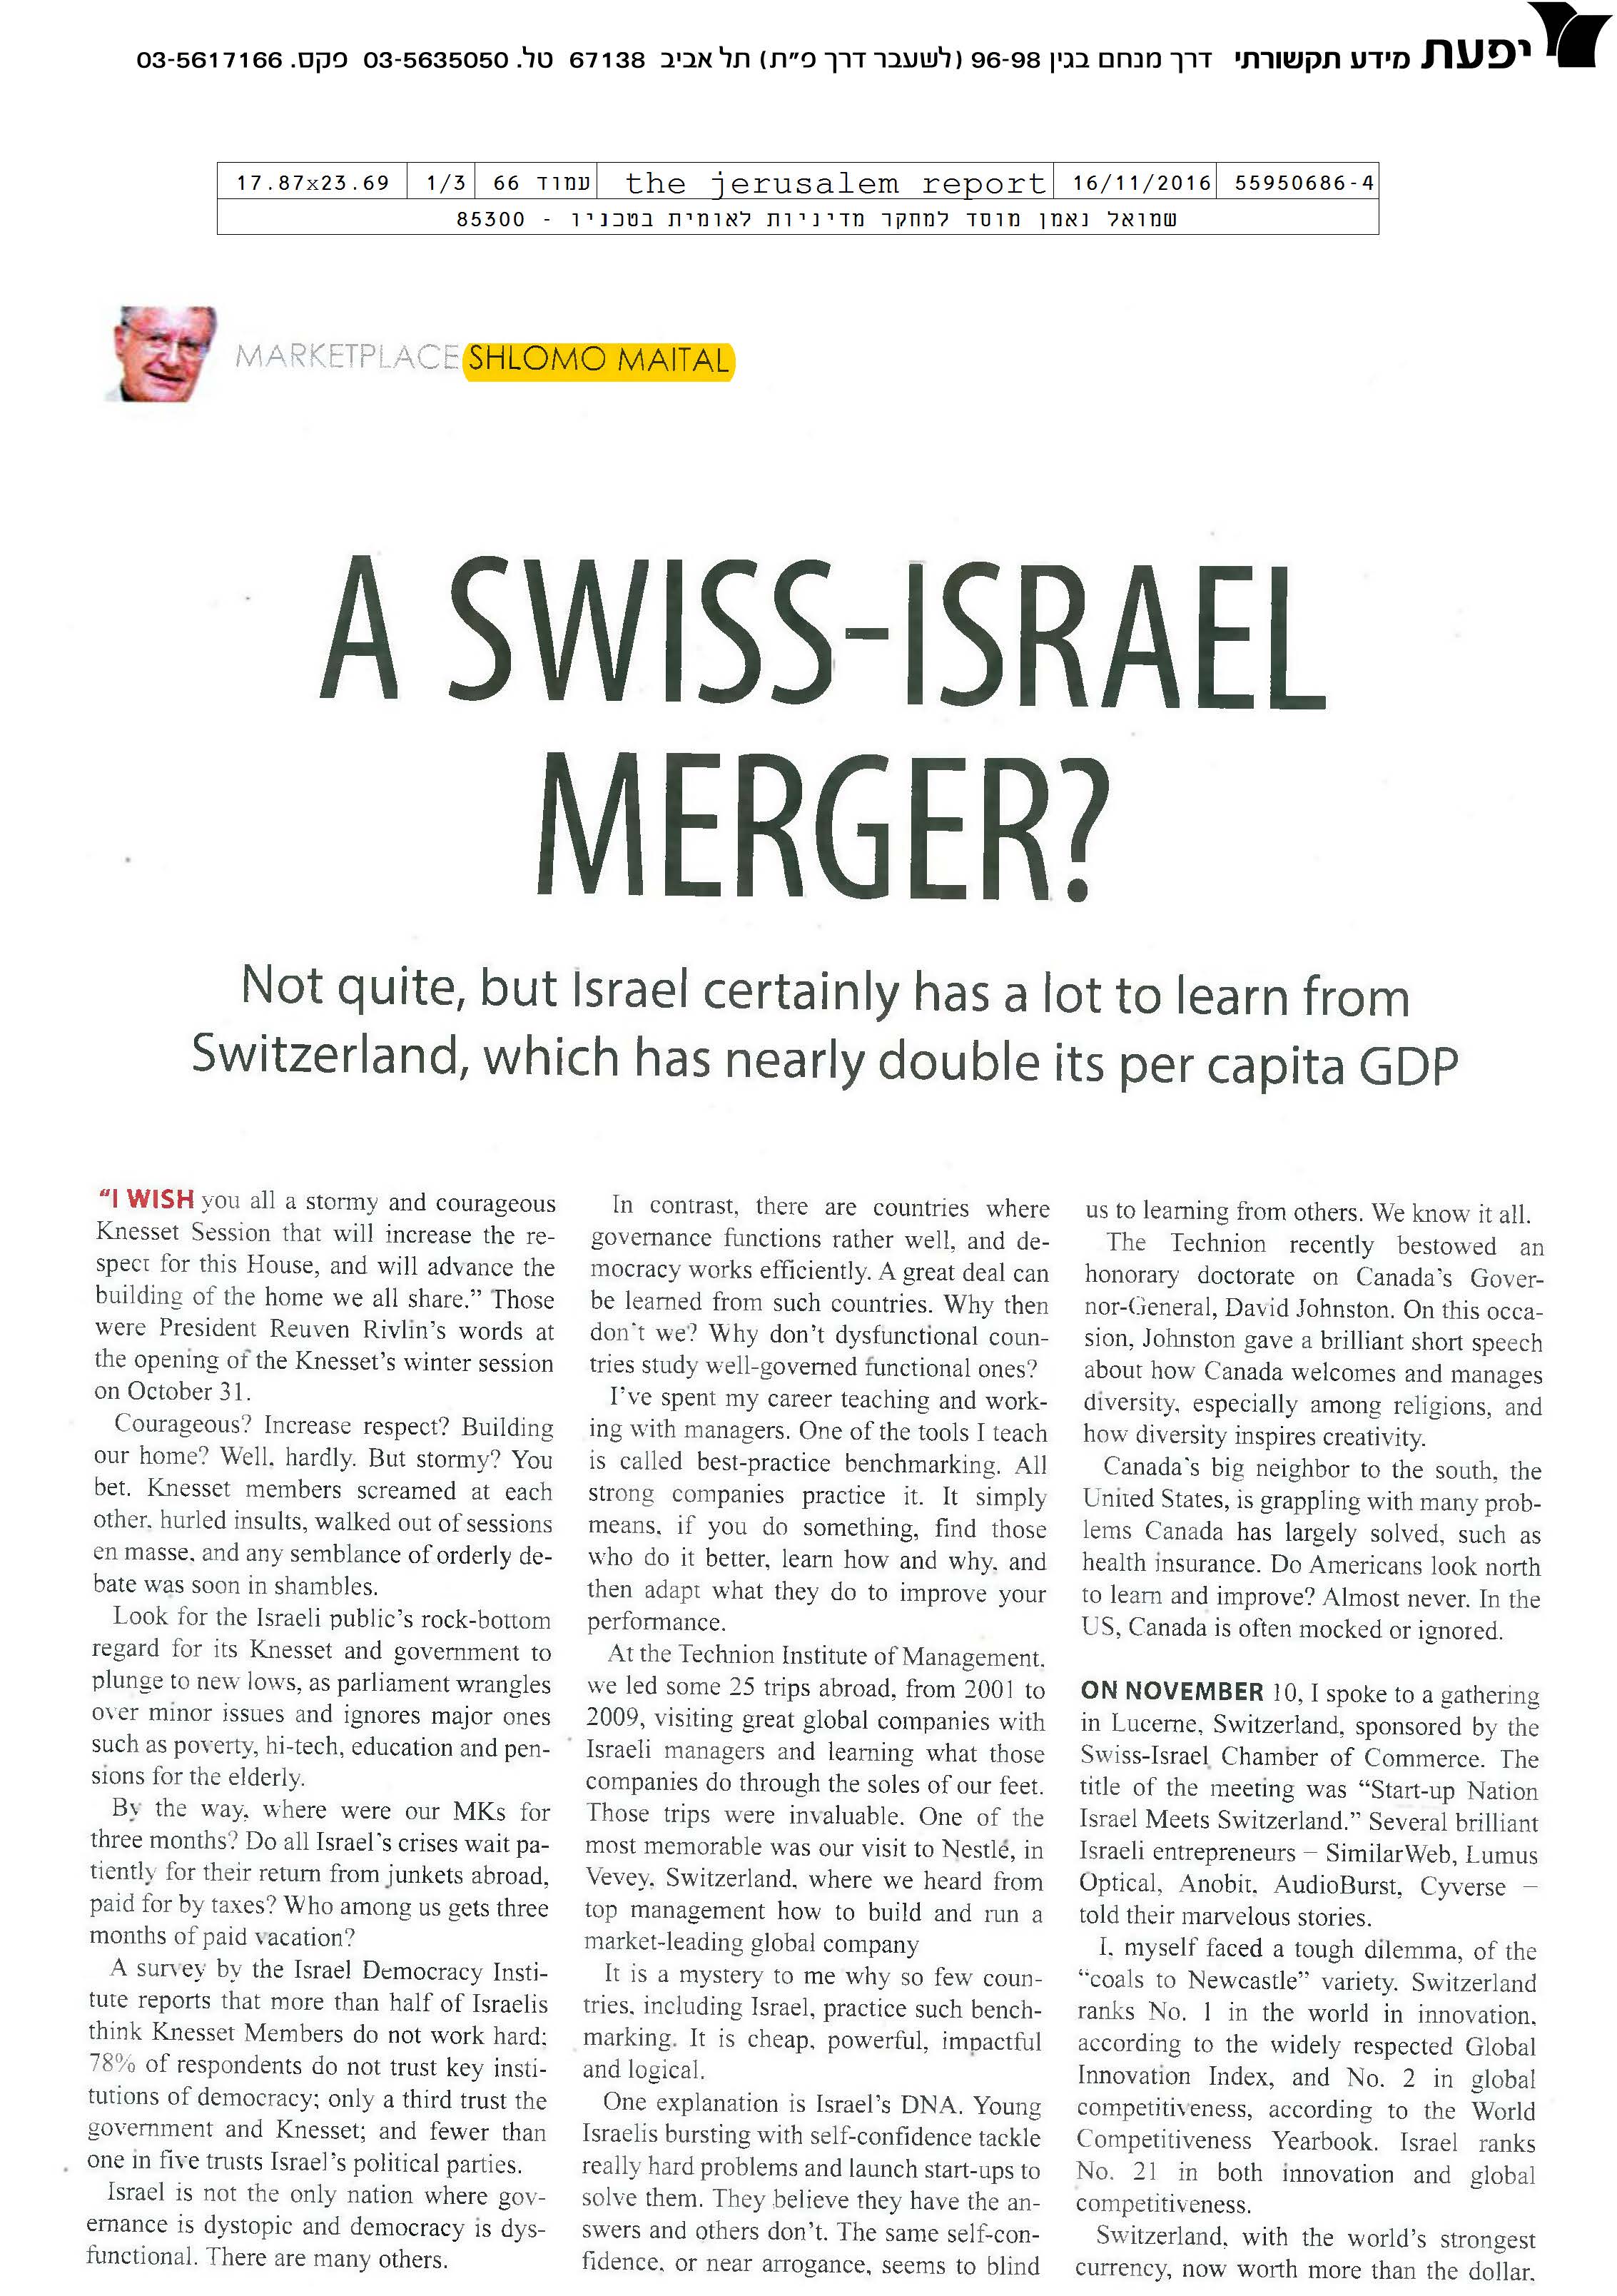 A Swiss-Israel merger?